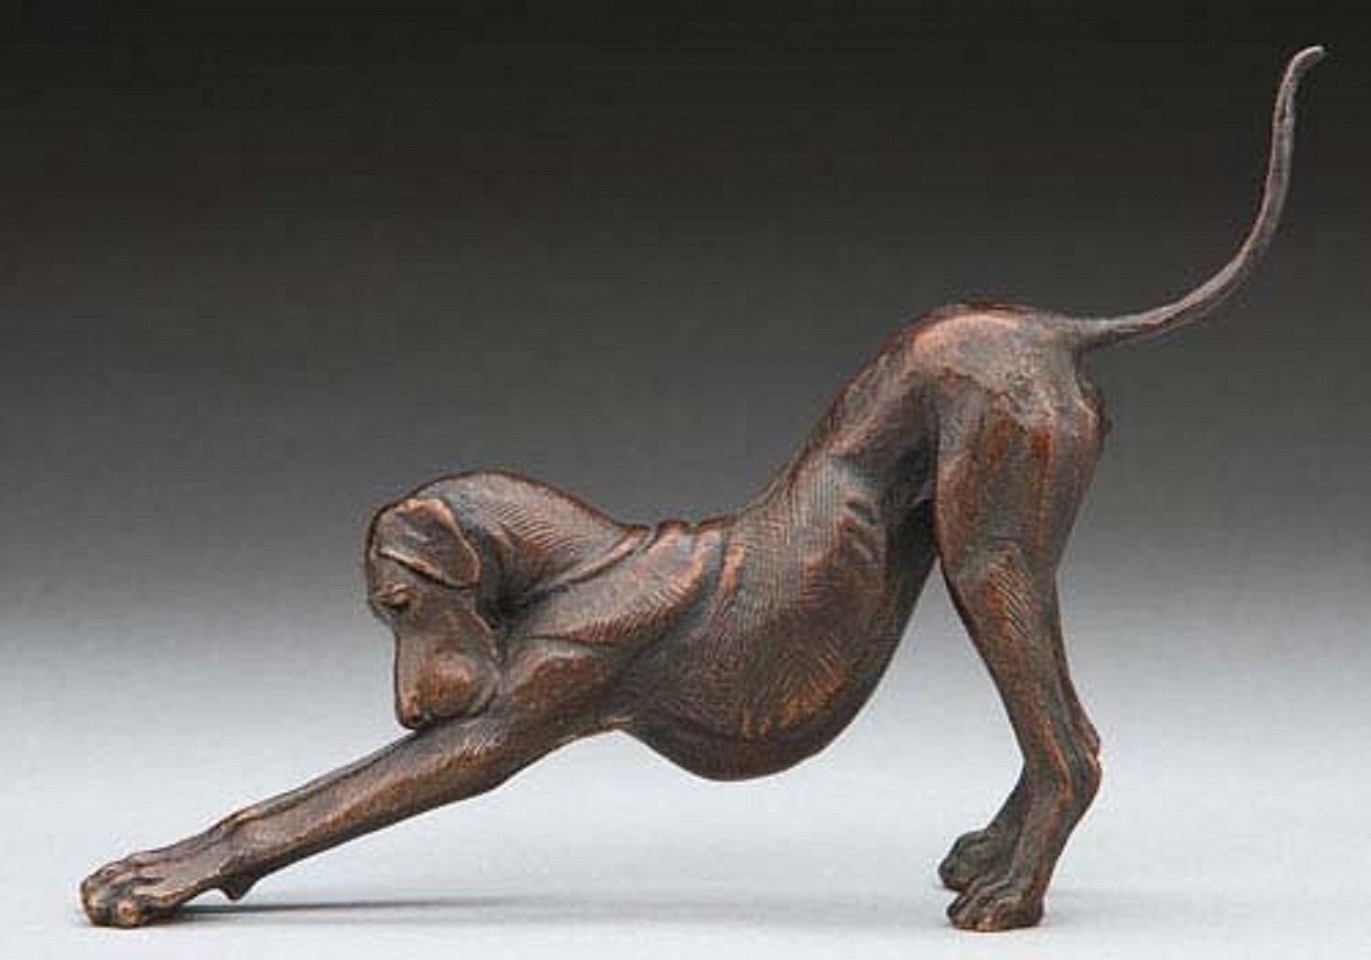 Louise Peterson, Downward Dog (mini), Ed. 65/99, 2003
bronze, 4 1/2 x 6 x 1 1/2 in. (11.4 x 15.2 x 3.8 cm)
LP181004